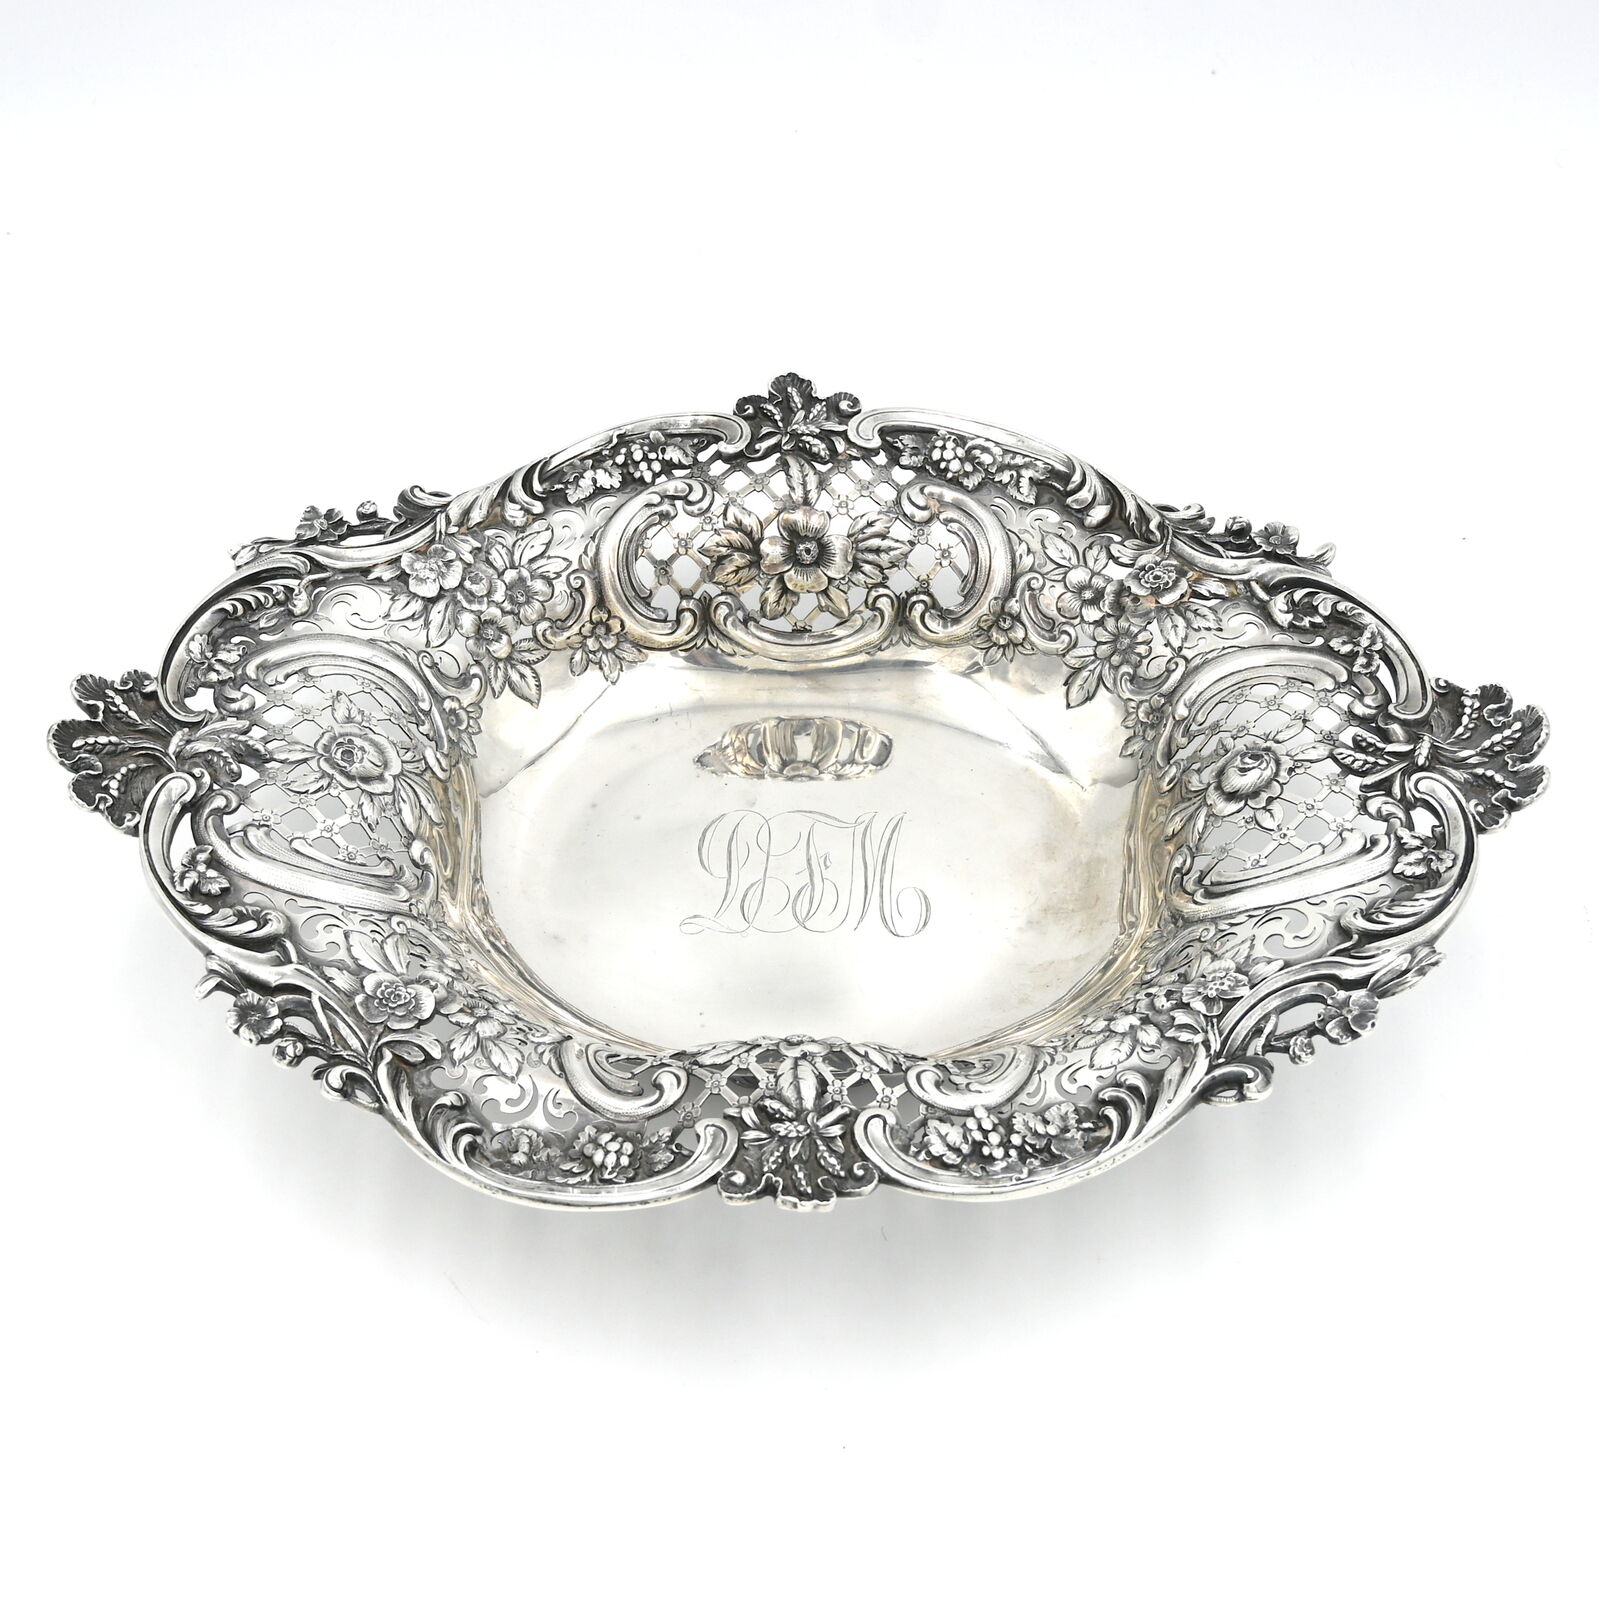 Antique Tiffany & Co Makers Pierced Repousse Centerpiece Bowl Sterling Silver